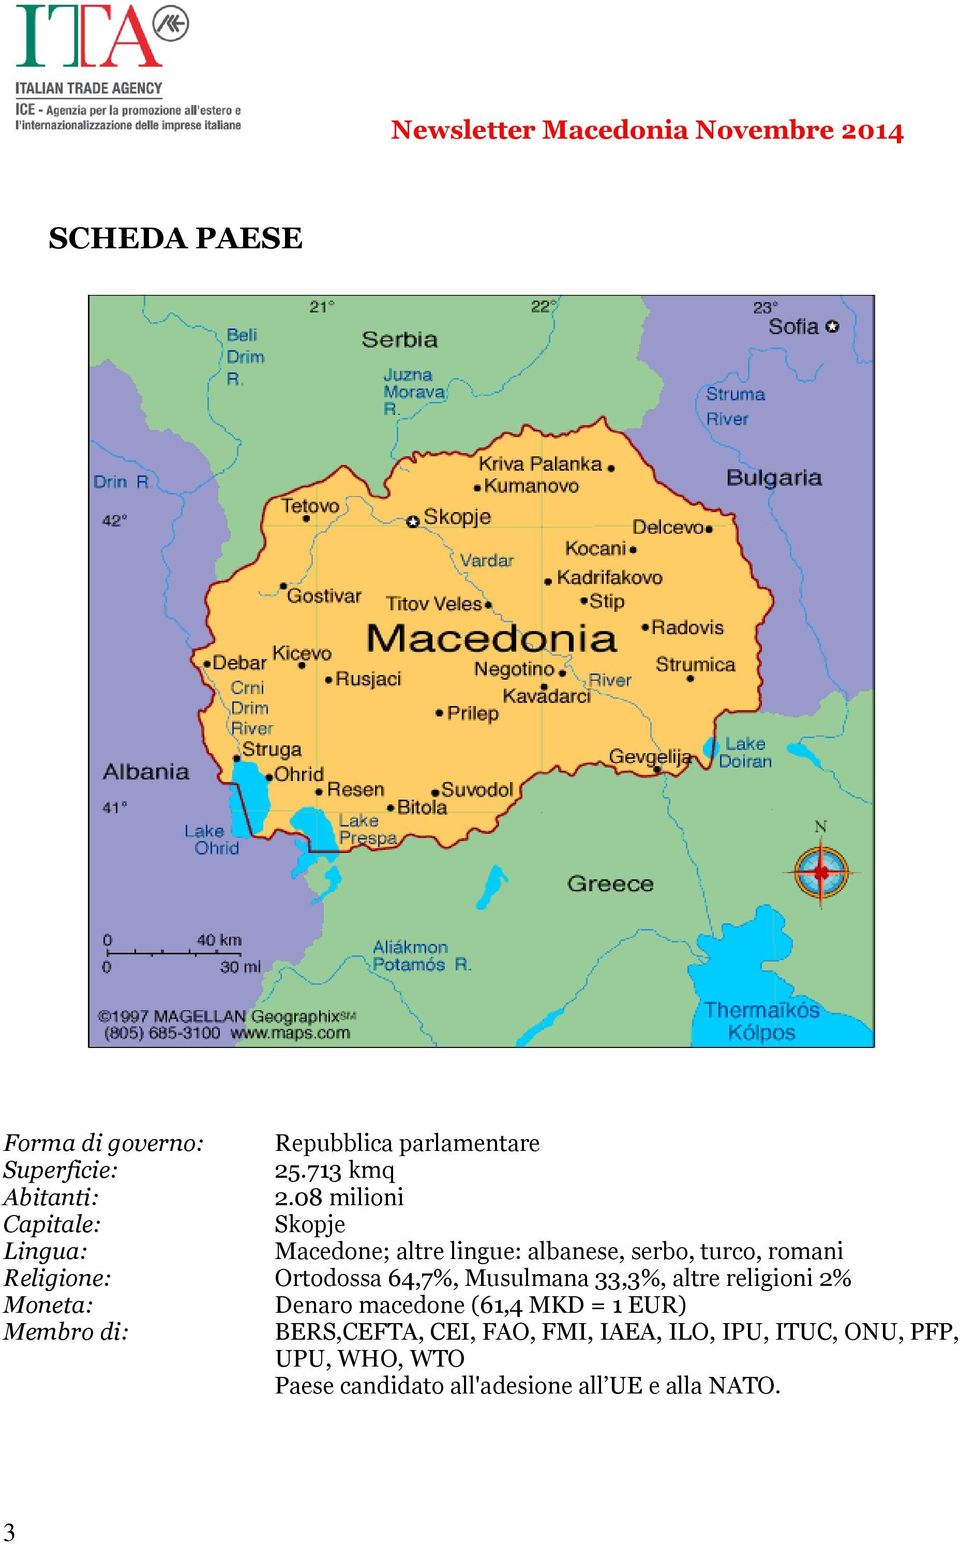 Ortodossa 64,7%, Musulmana 33,3%, altre religioni 2% Moneta: Denaro macedone (61,4 MKD = 1 EUR) Membro